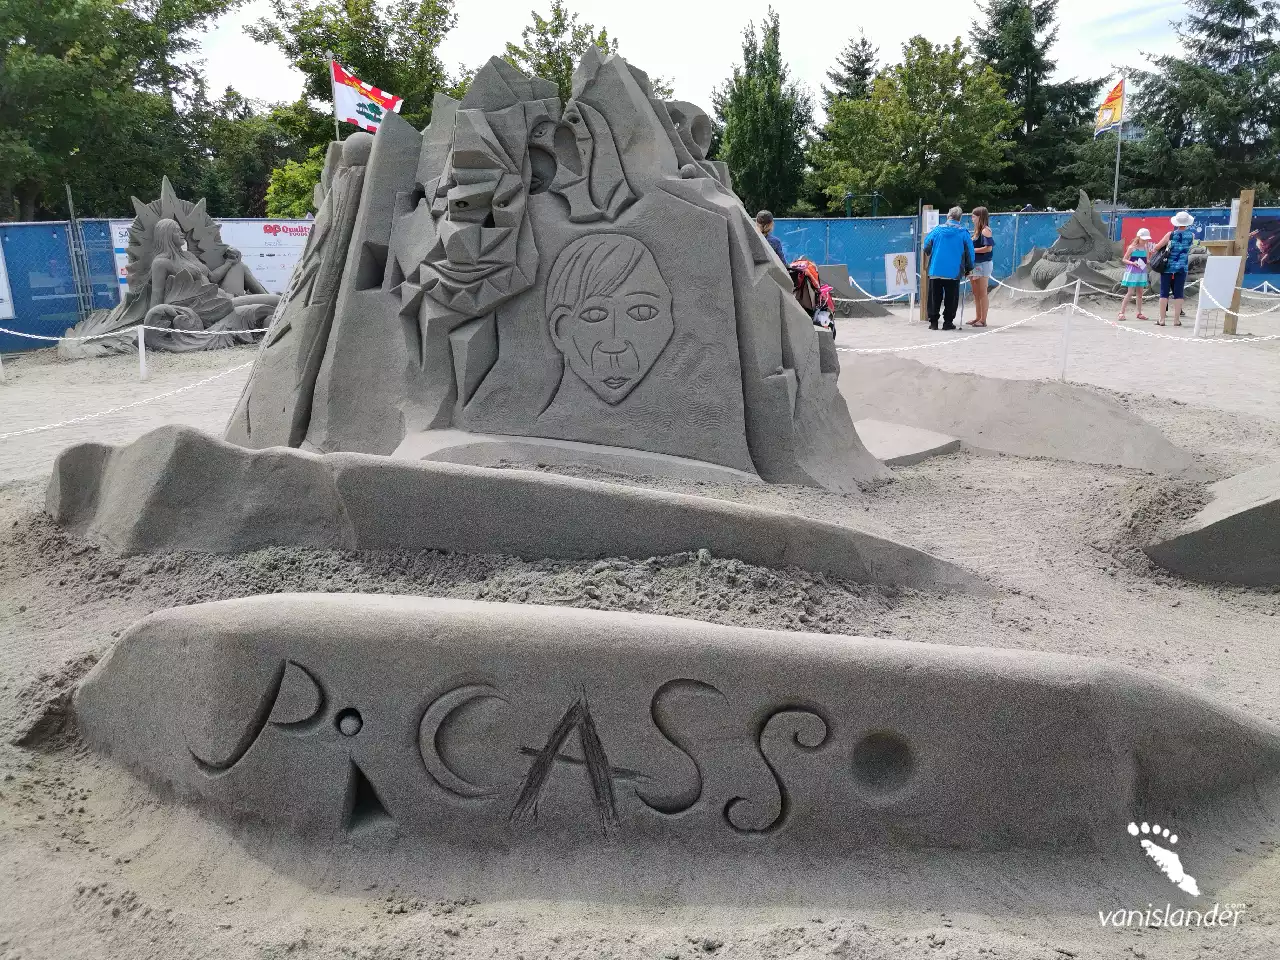 Art Sculpture on Sand - Parksville Festival, Vancouver Island